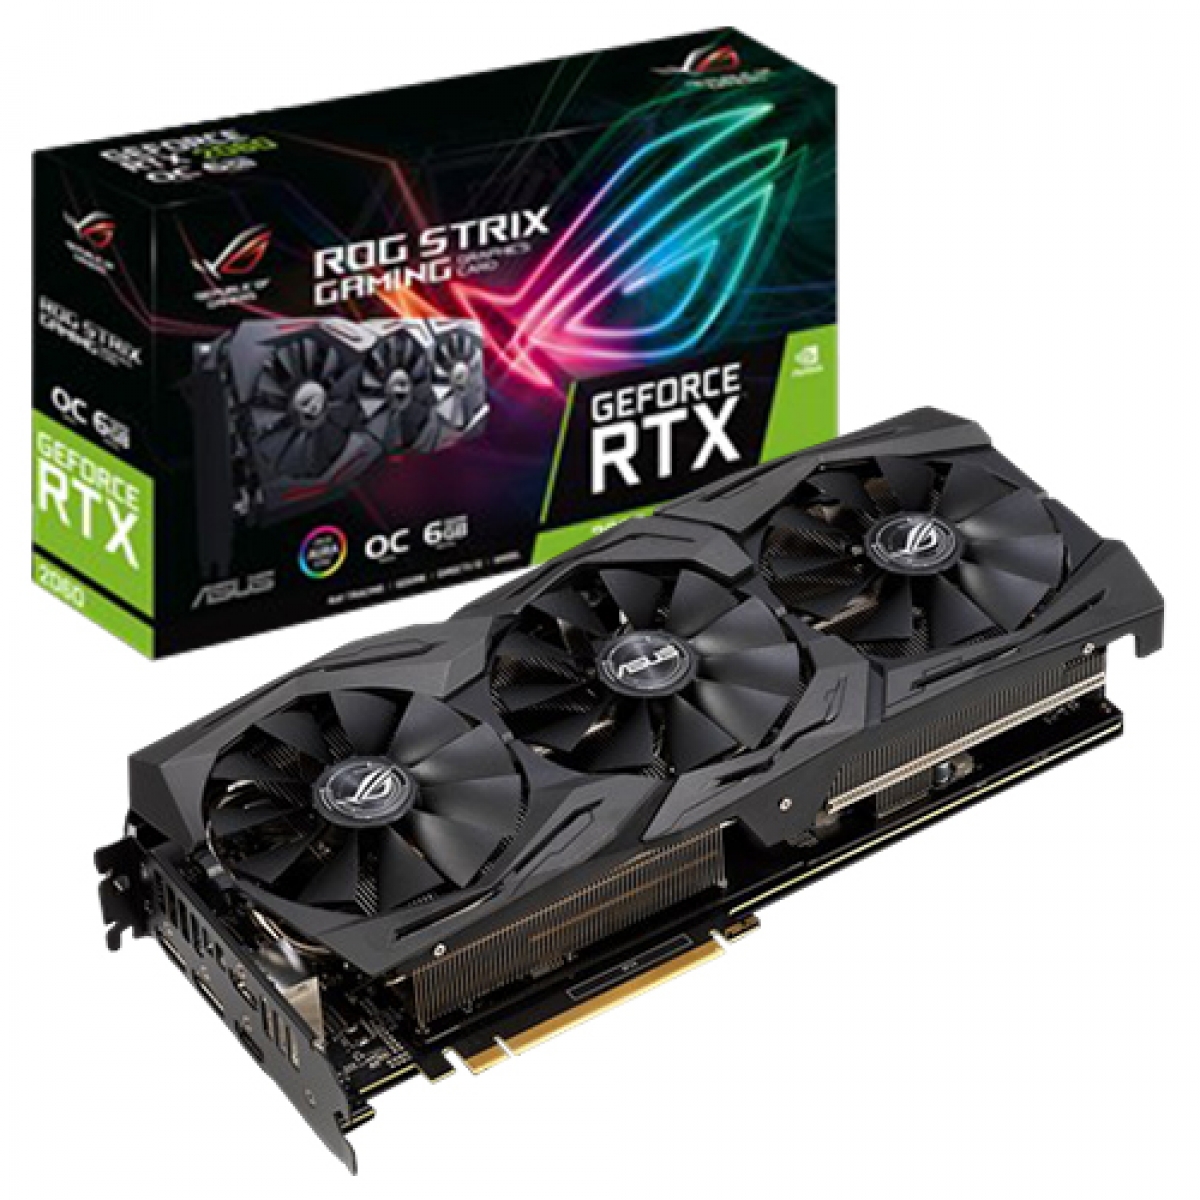 Placa de Vídeo Asus GeForce RTX 2060 Rog Strix Gaming Oc Edition, 6GB  GDDR6, 192Bit, ROG-